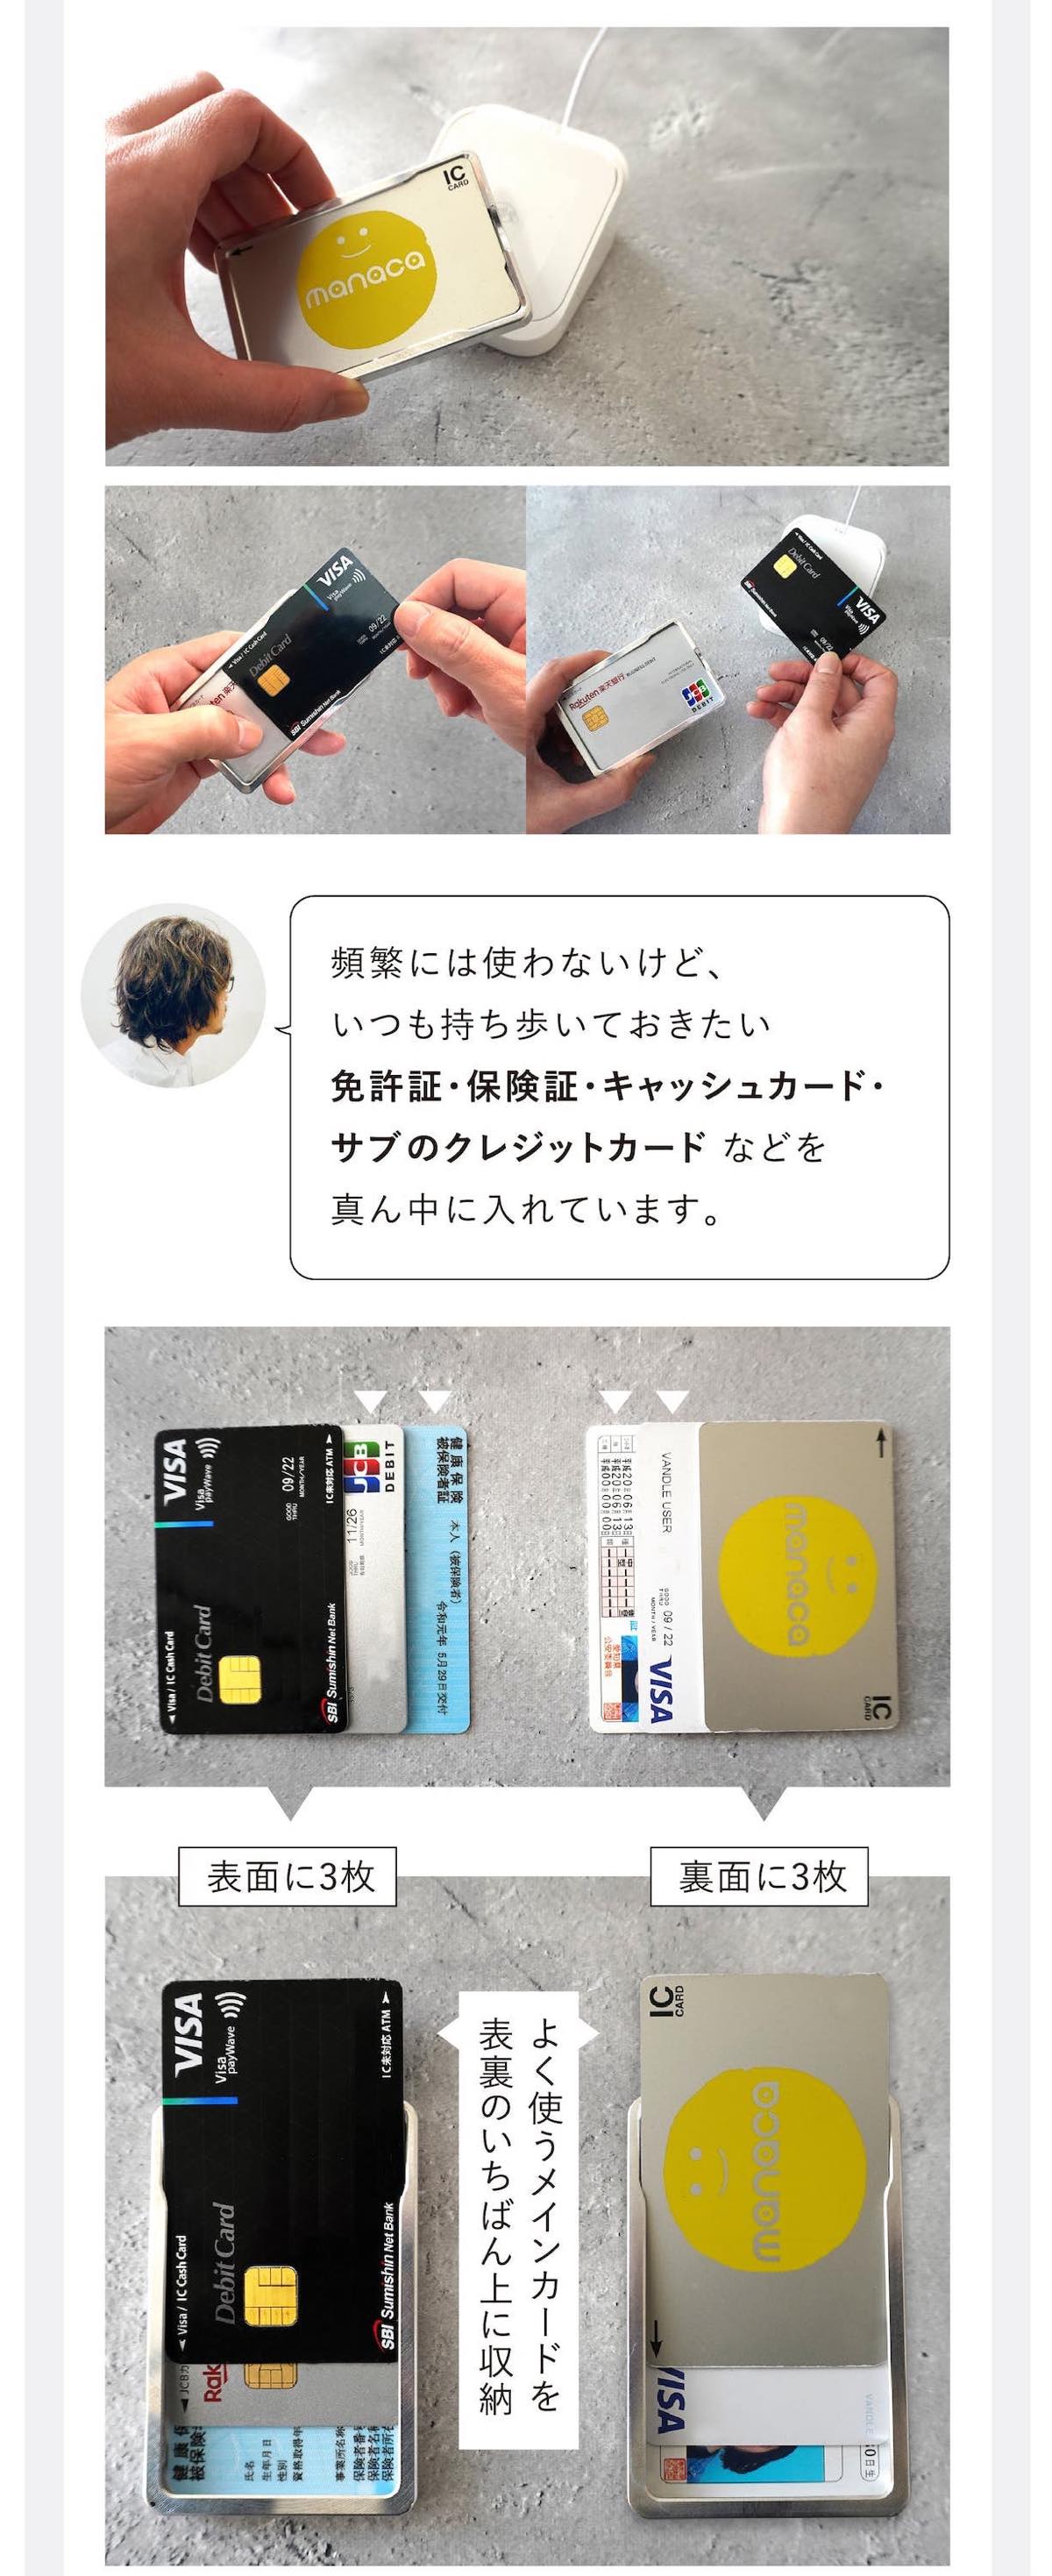 NIUM CLASSIC ニウムクラシック 次世代フレーム型 日本製 アルミ削り出し カードケース クレジットカード ICカード suica